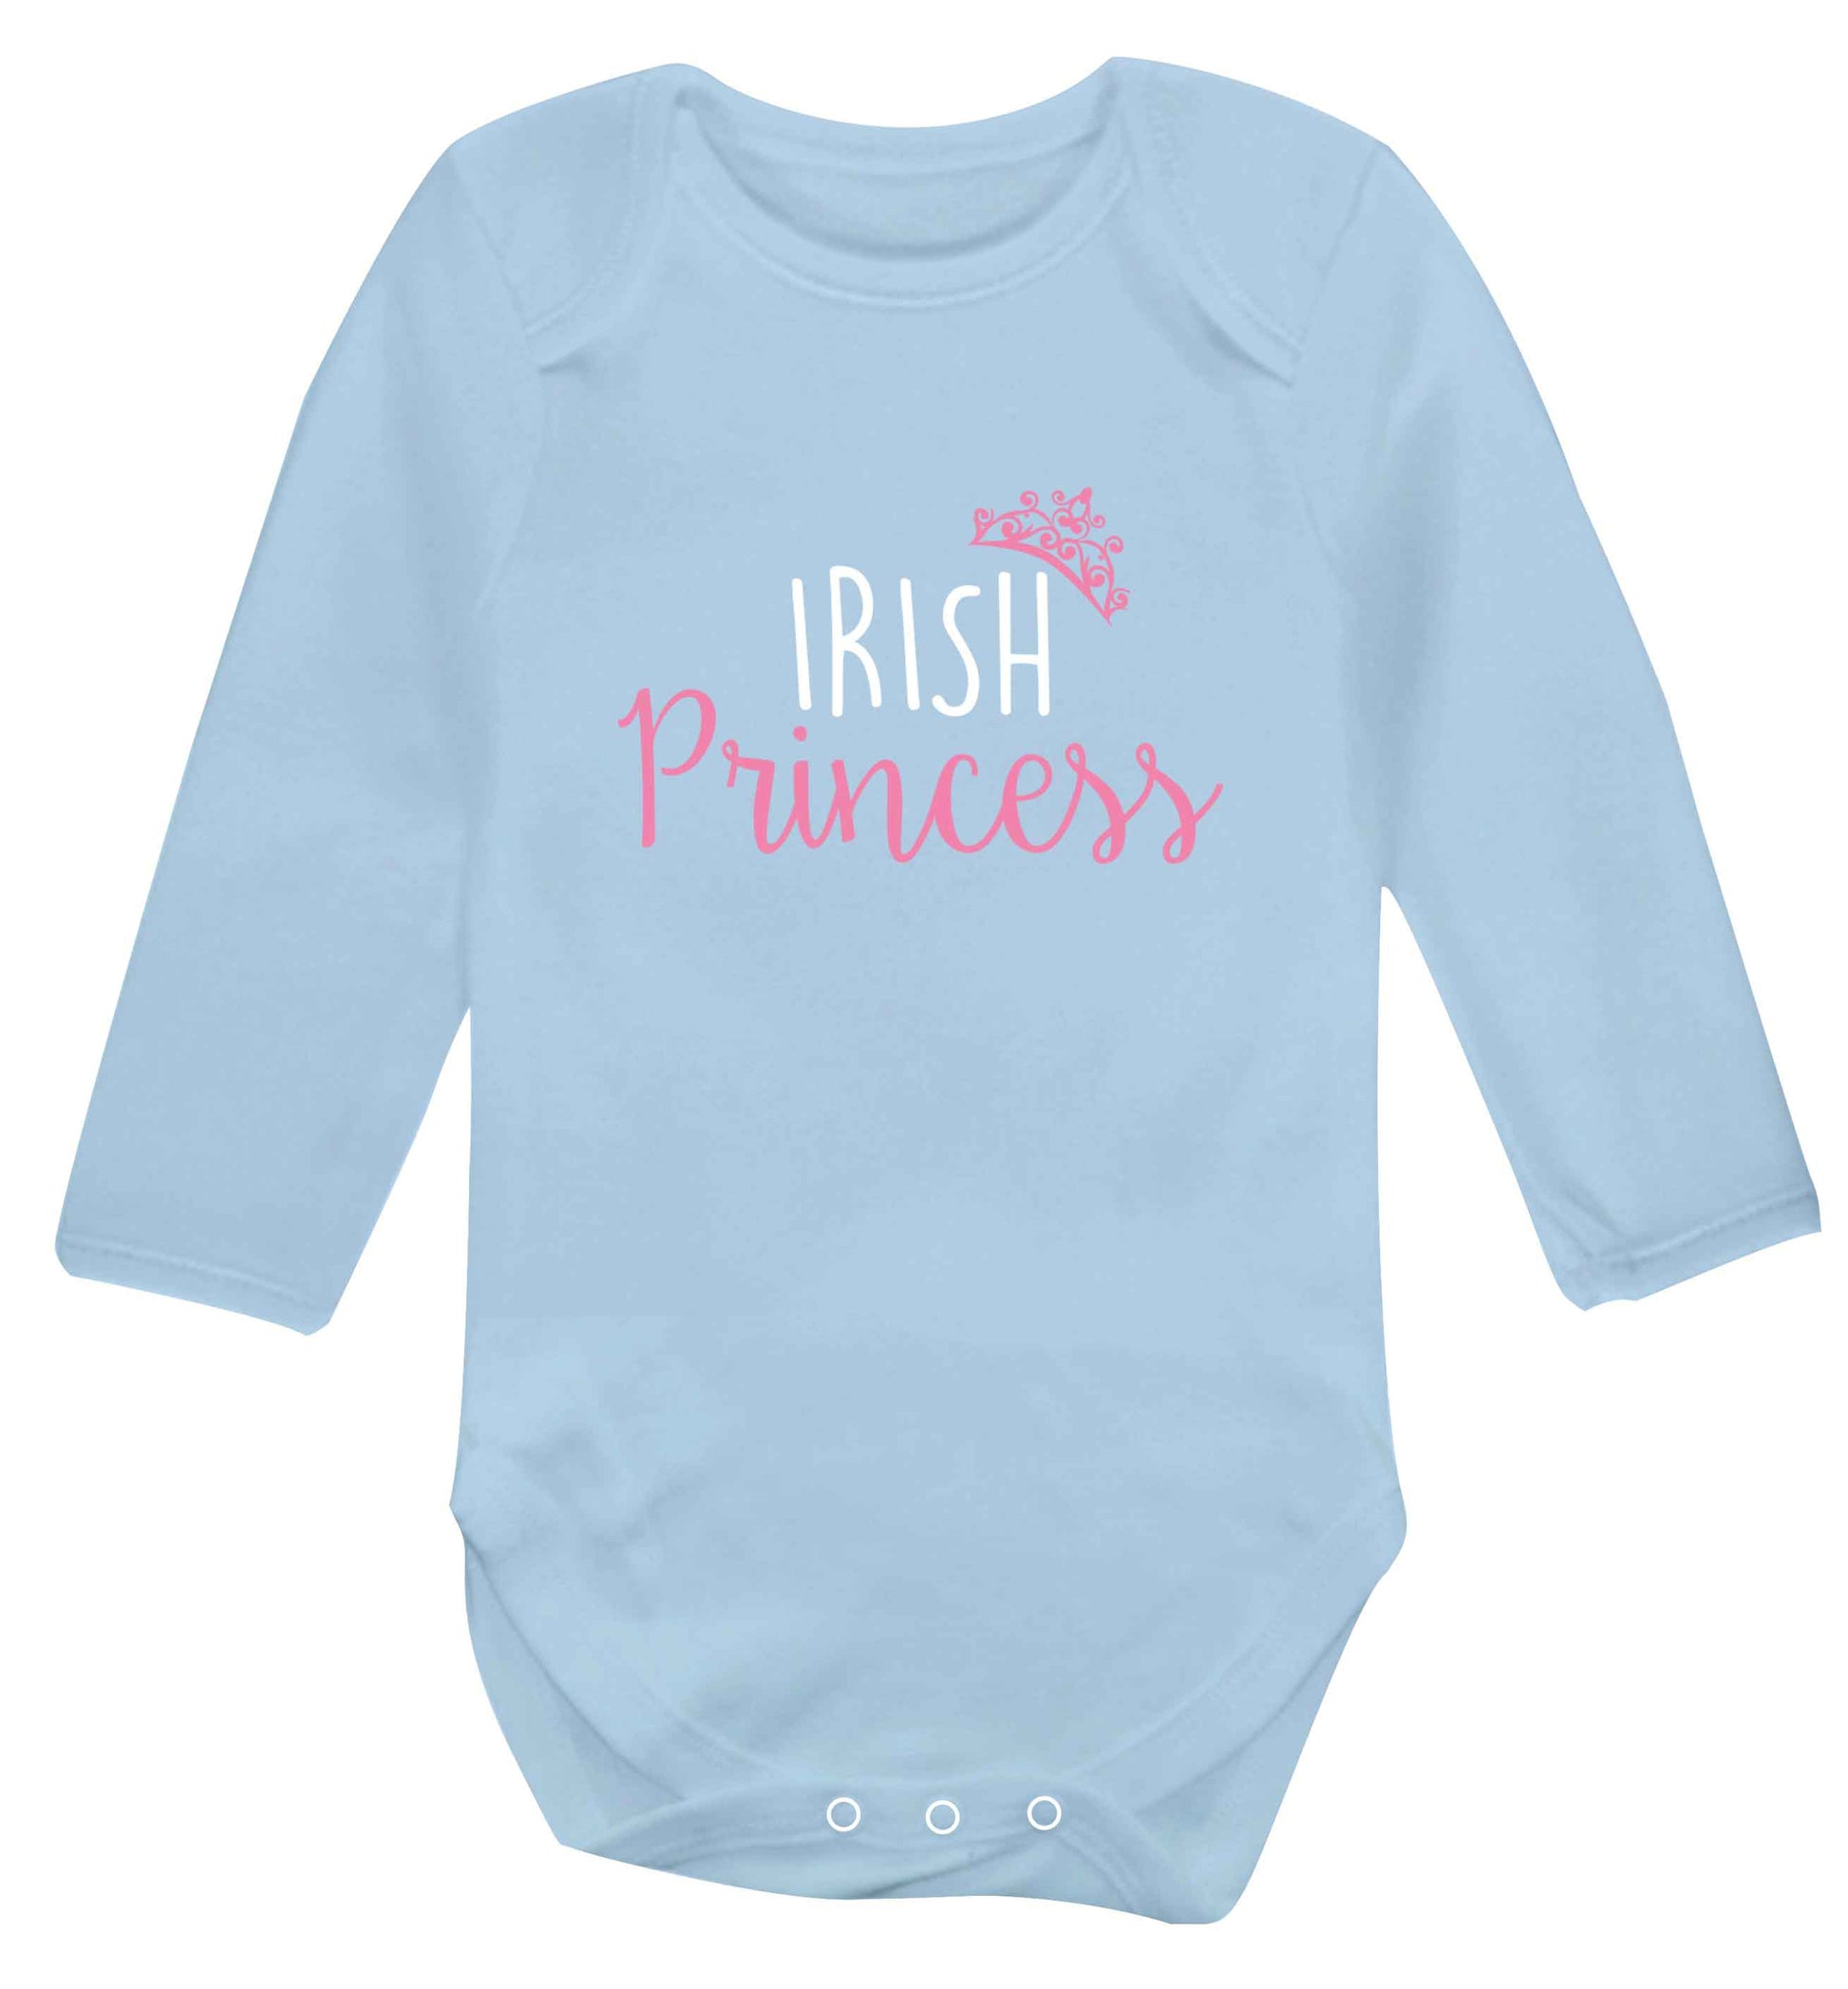 Irish princess baby vest long sleeved pale blue 6-12 months